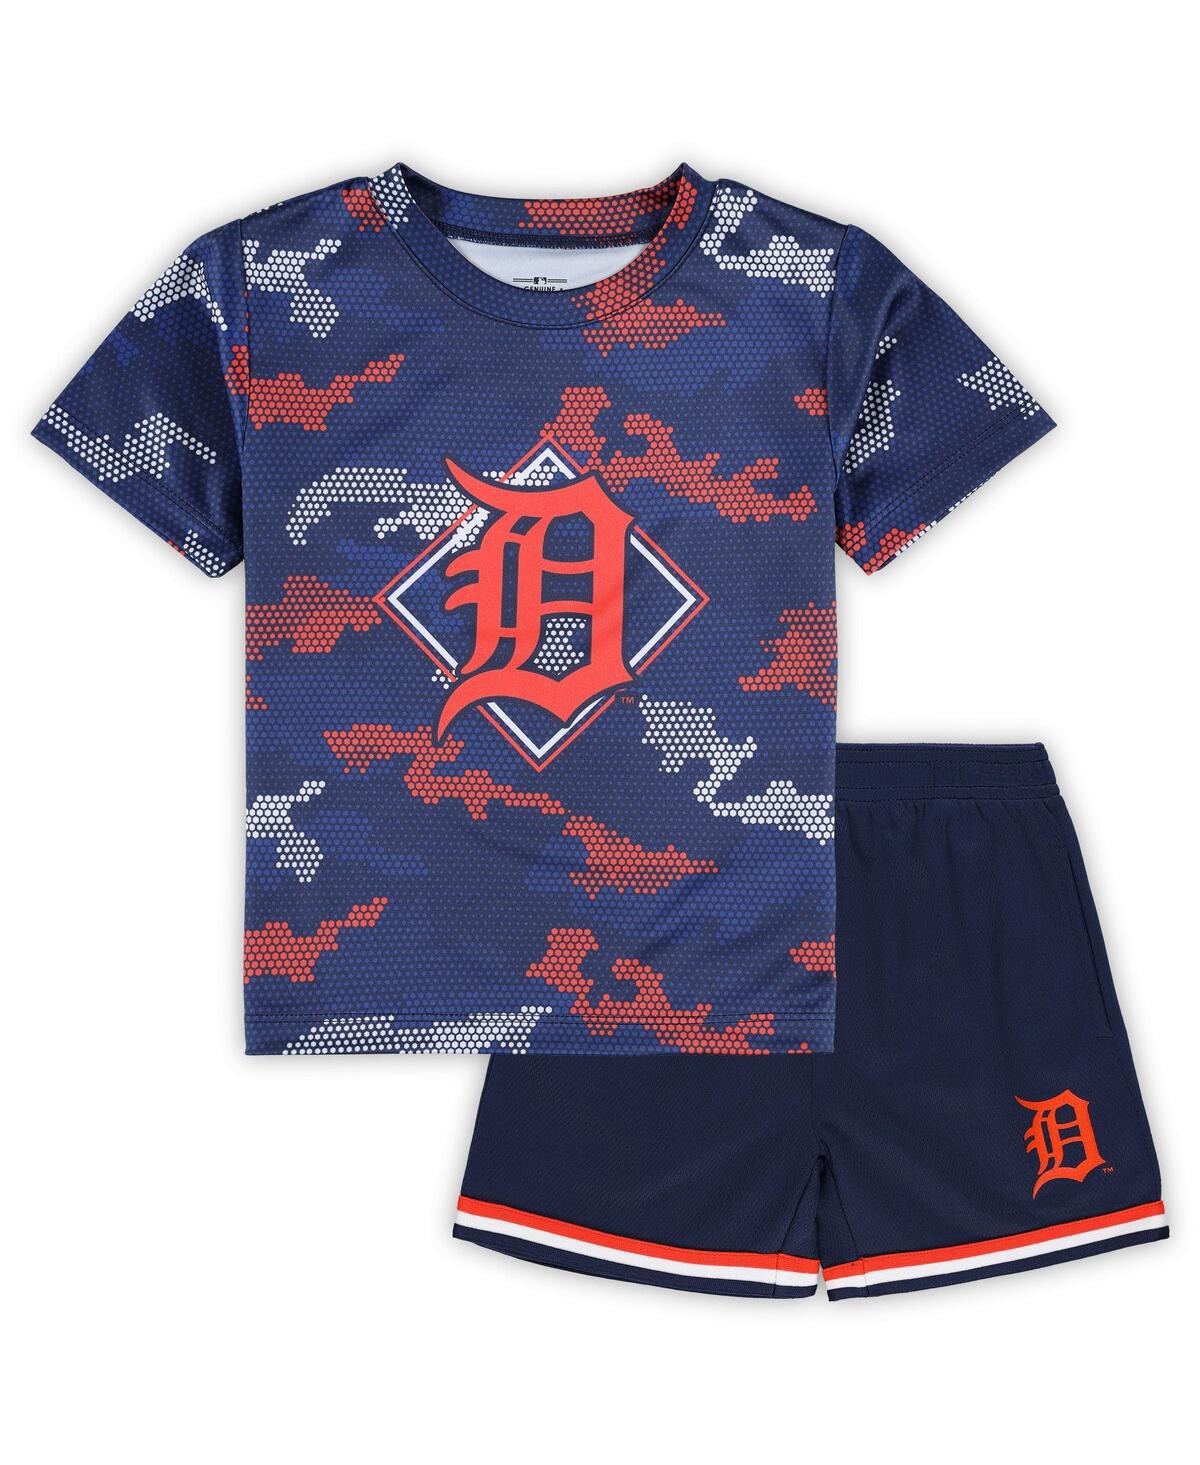 Outerstuff Babies' Toddler Boys And Girls Fanatics Navy Detroit Tigers Field Ball T-shirt And Shorts Set